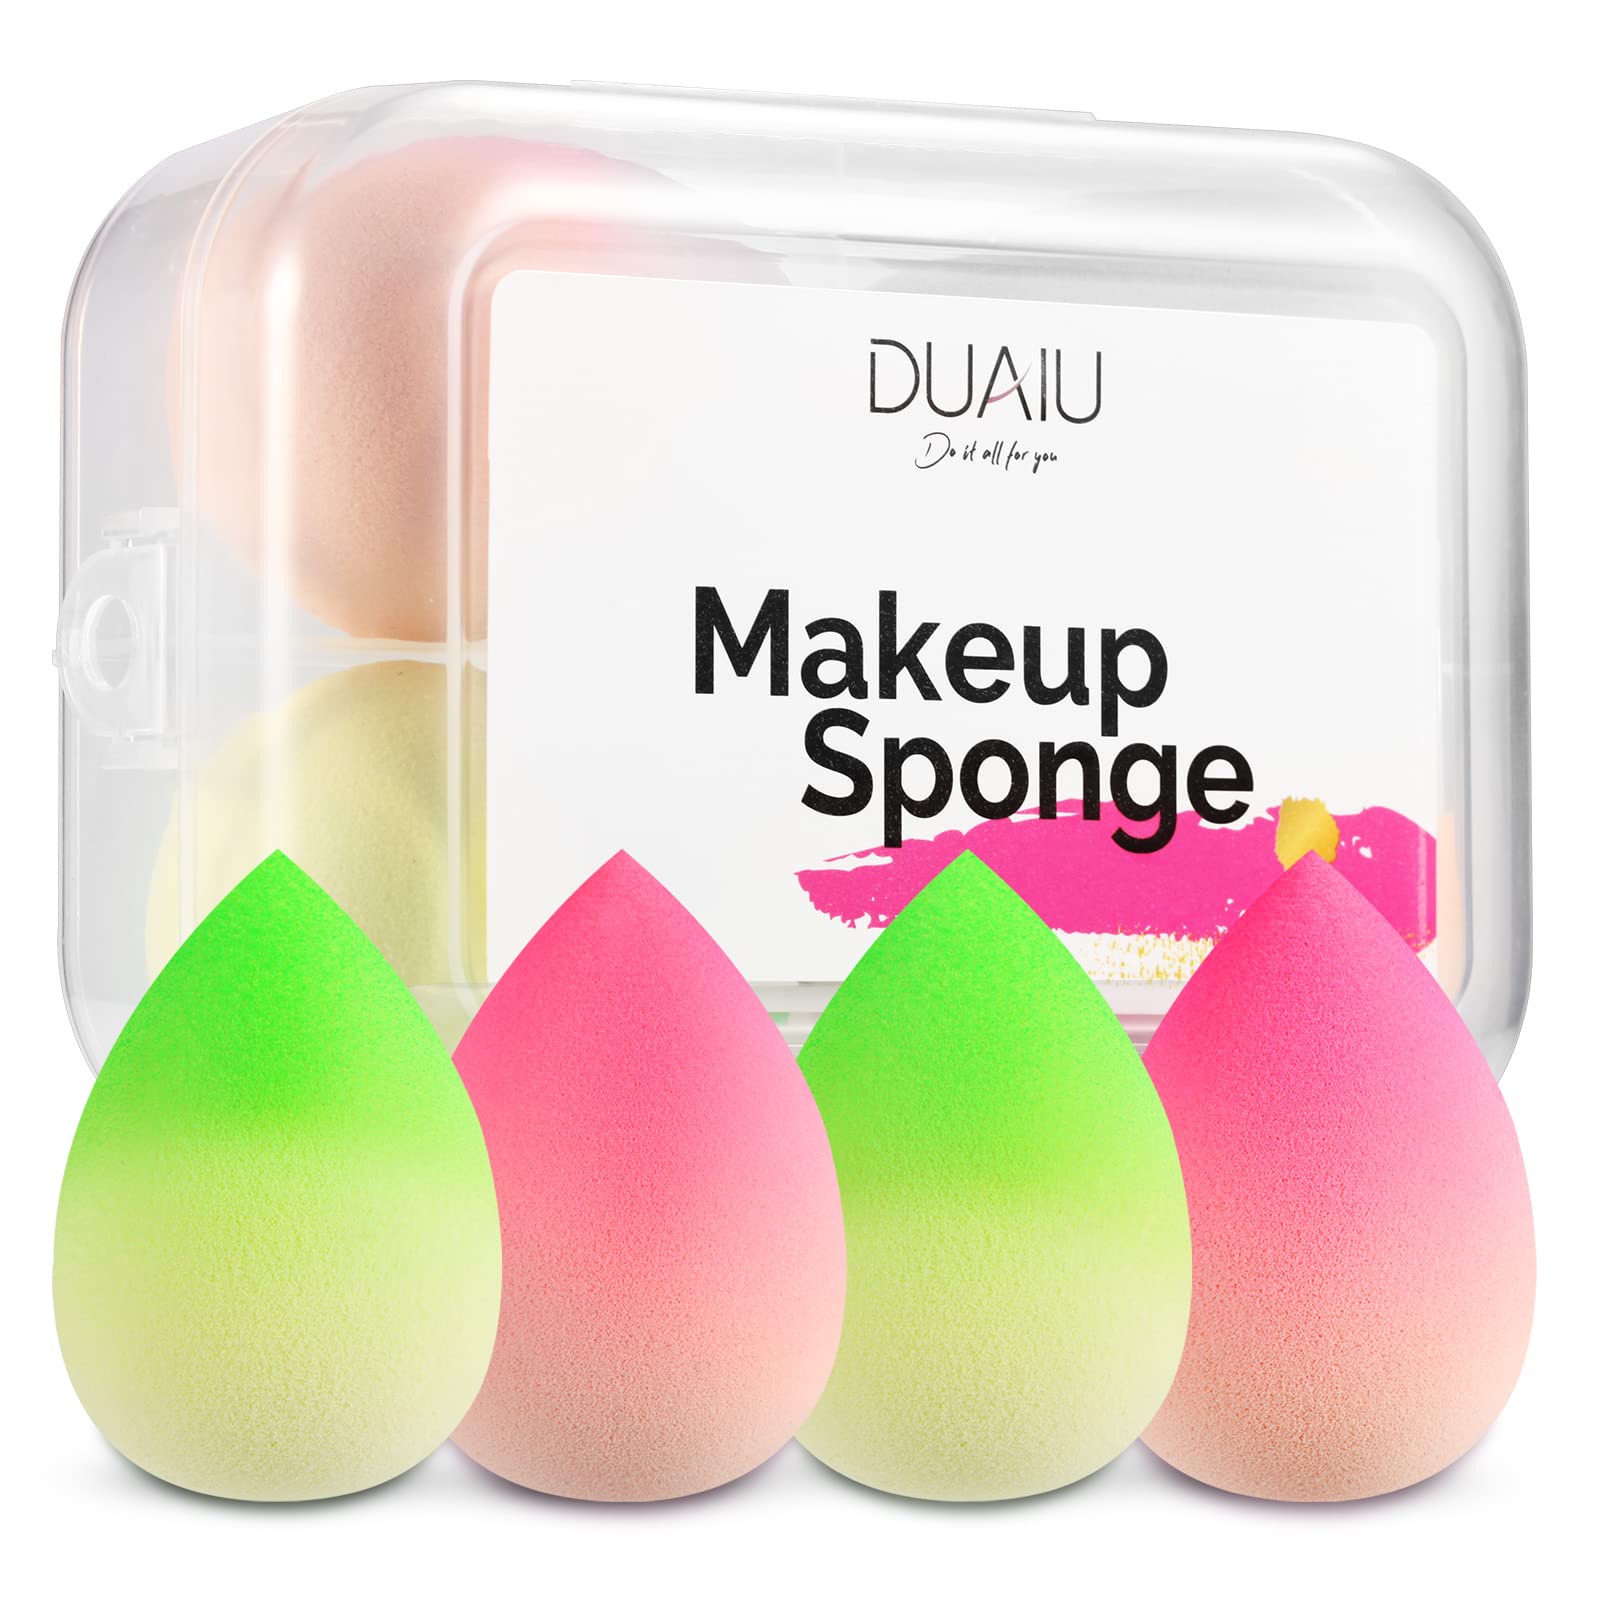 Makeup Sponge Set DUAIU 4 Pcs Foundation Blending Beauty Blender Sponge Dry  & Wet Use for Powder Cream or Liquid Multi-colored Makeup Sponges Green+Red